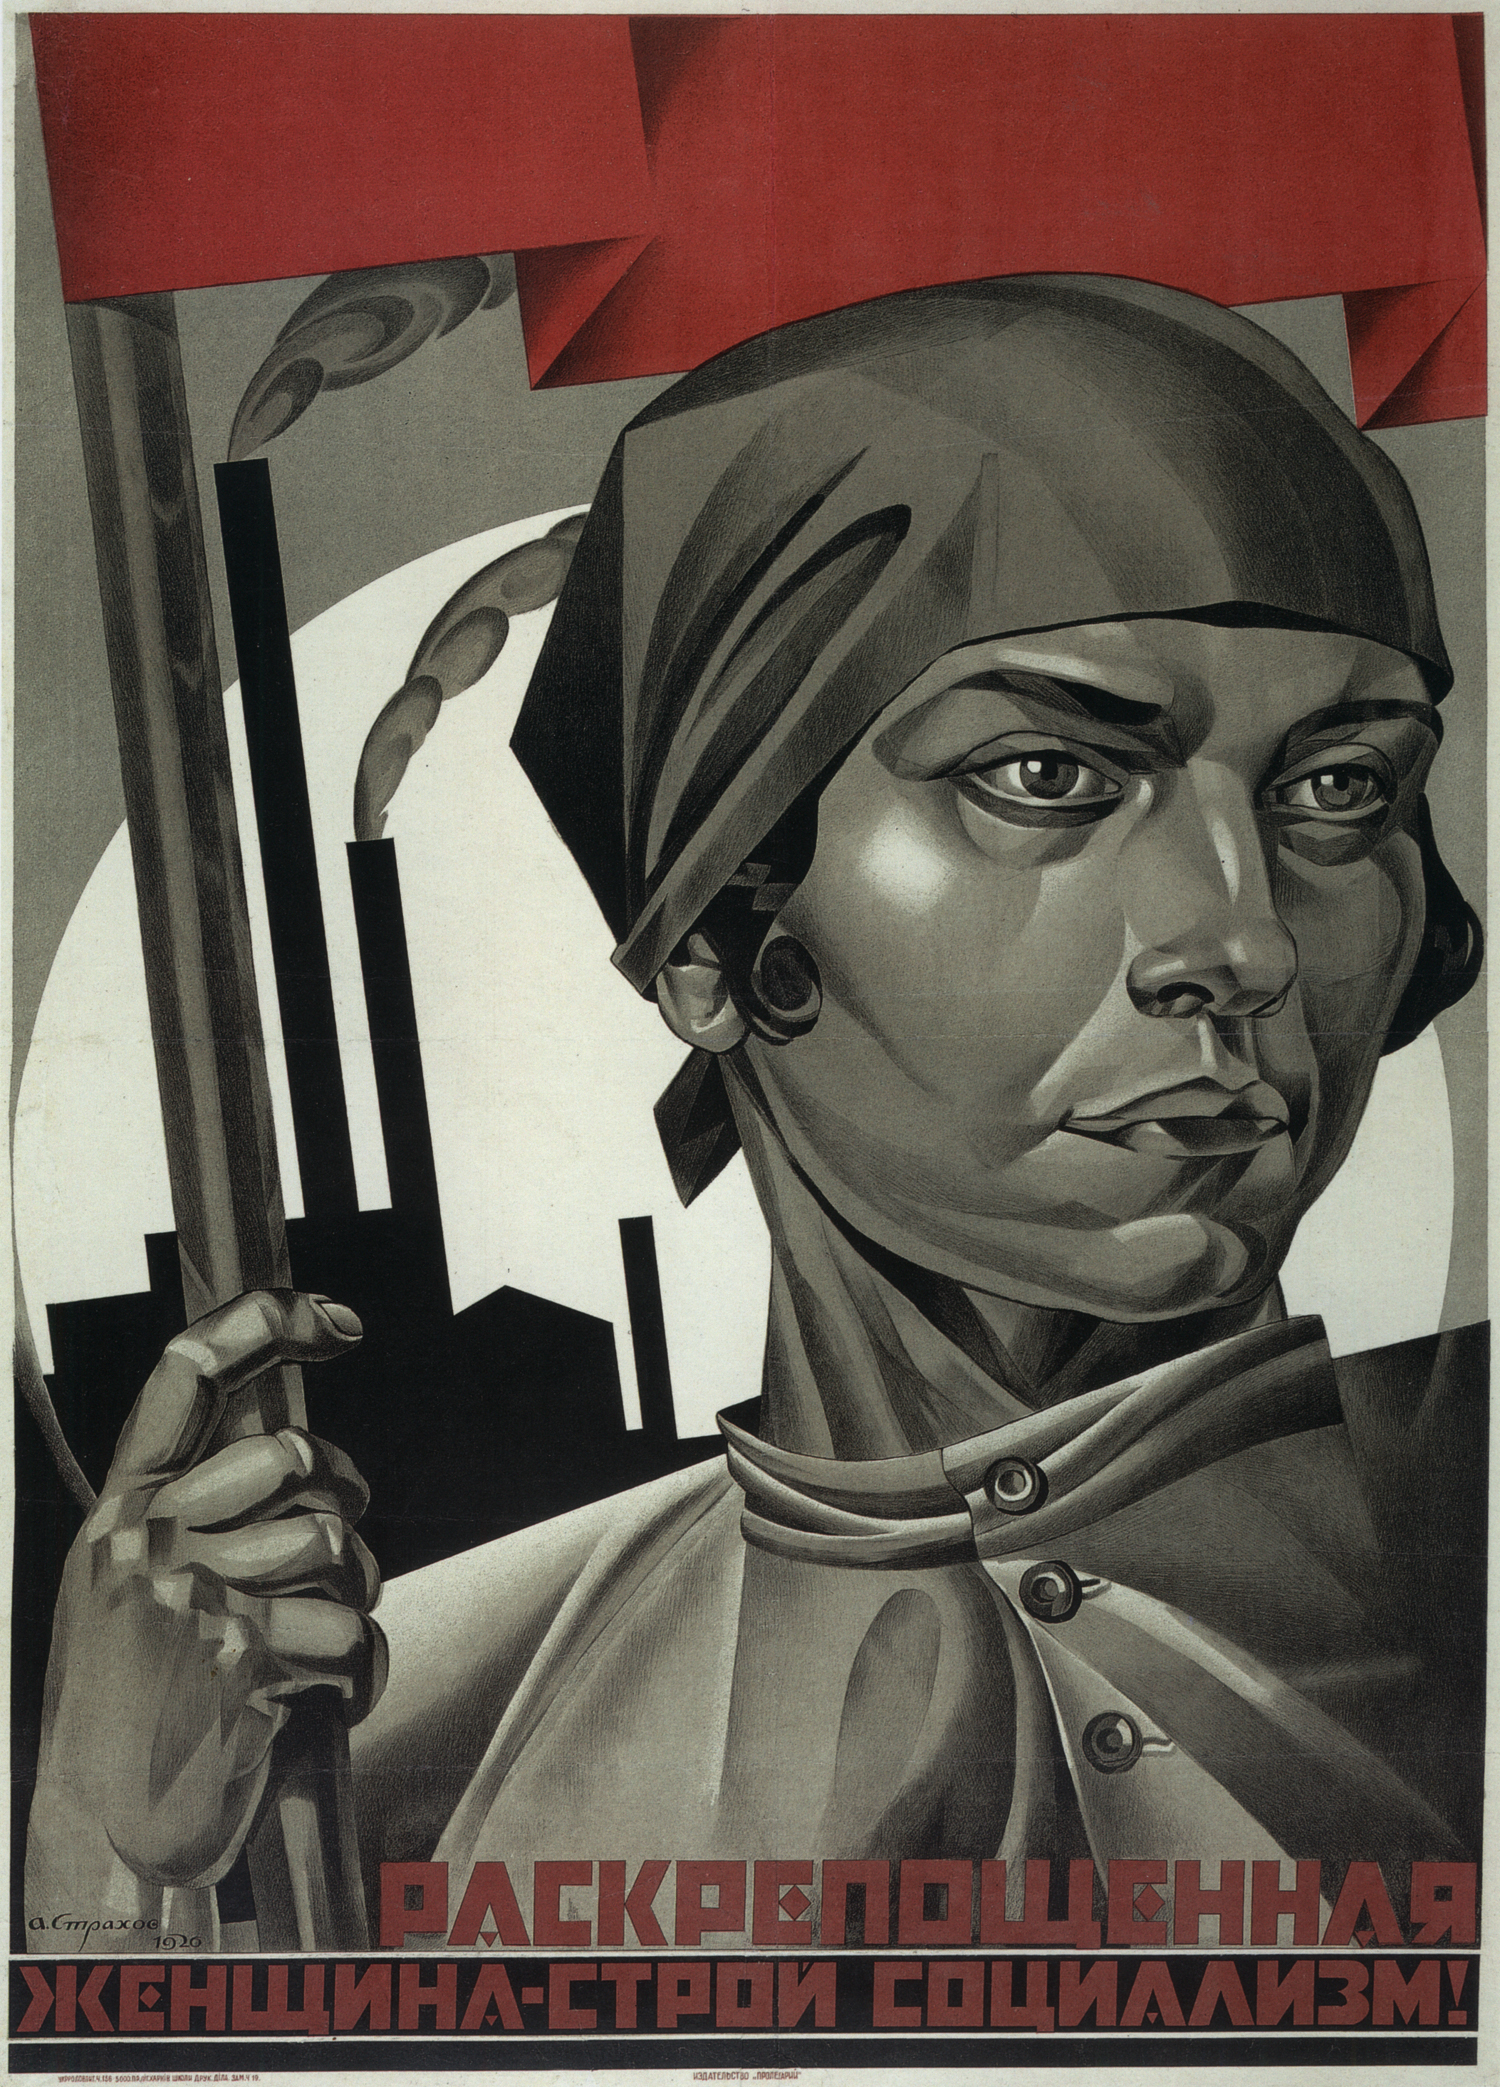 Geëmancipeerde Vrouw: Bouw Socialisme Op! by Adolf Strakhov - 1926 